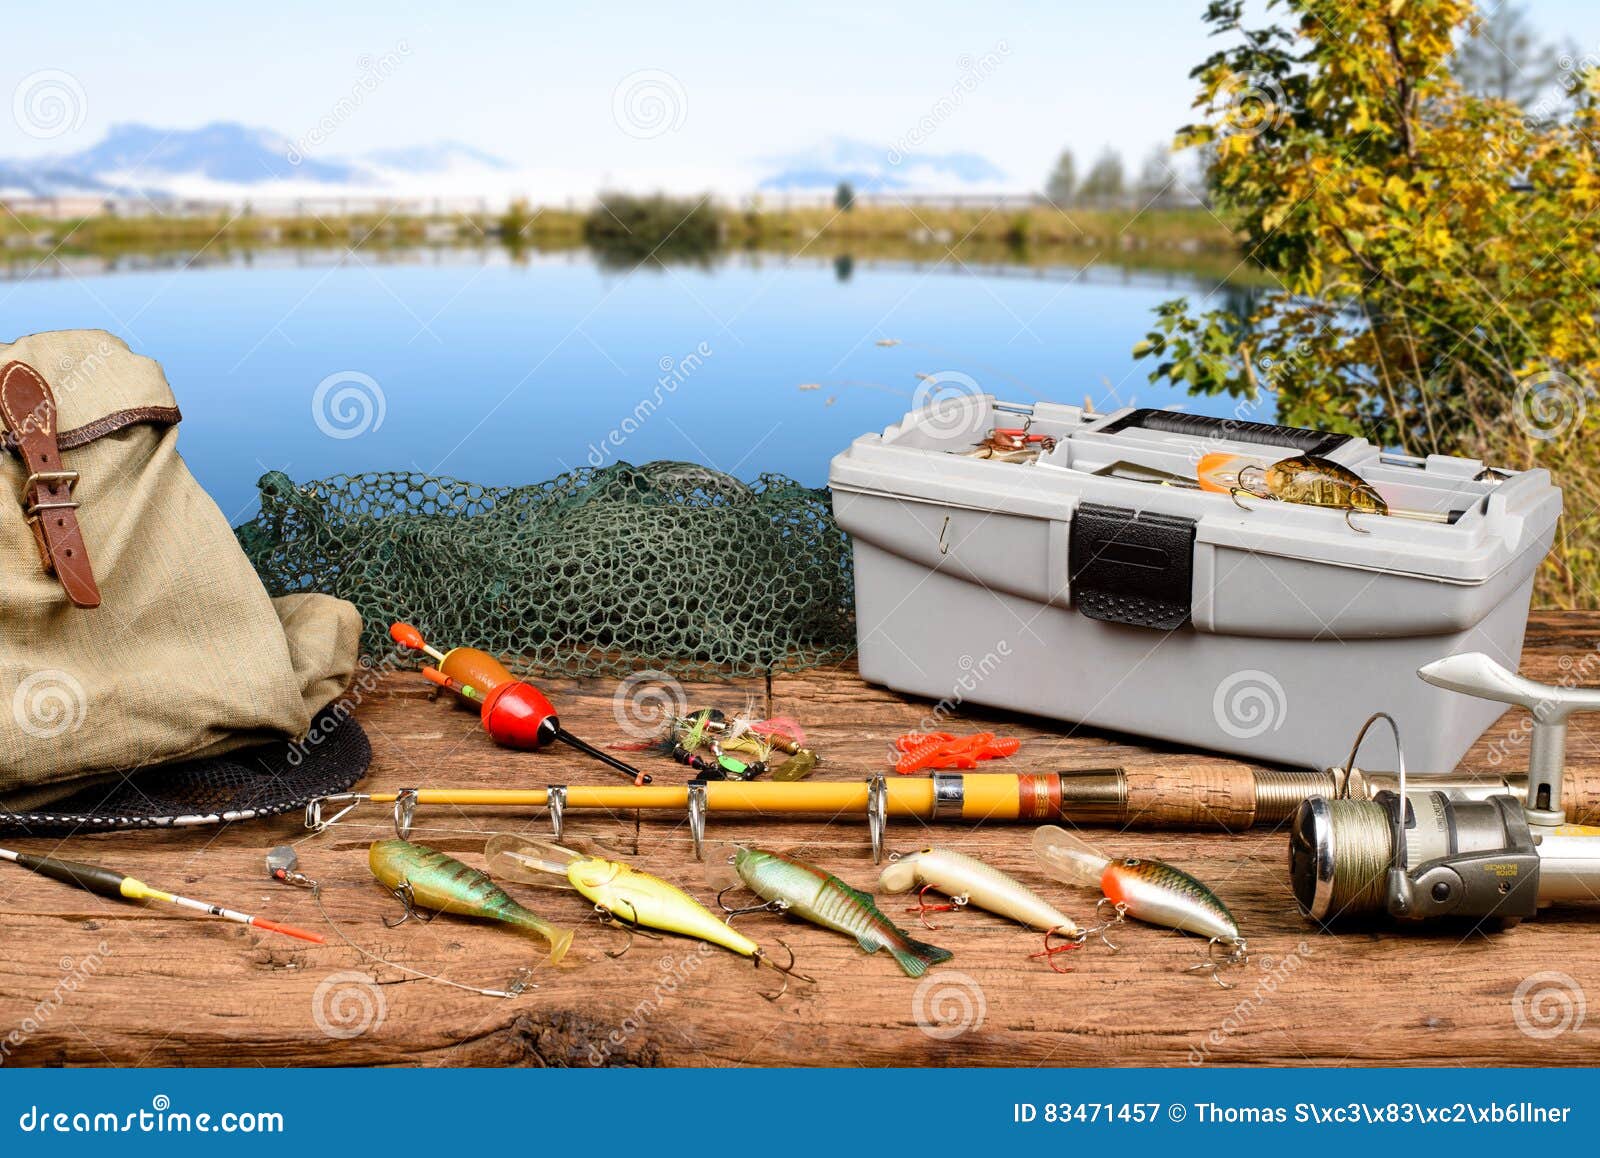 Fishing equipment stock image. Image of reel, lure, sport - 83471457